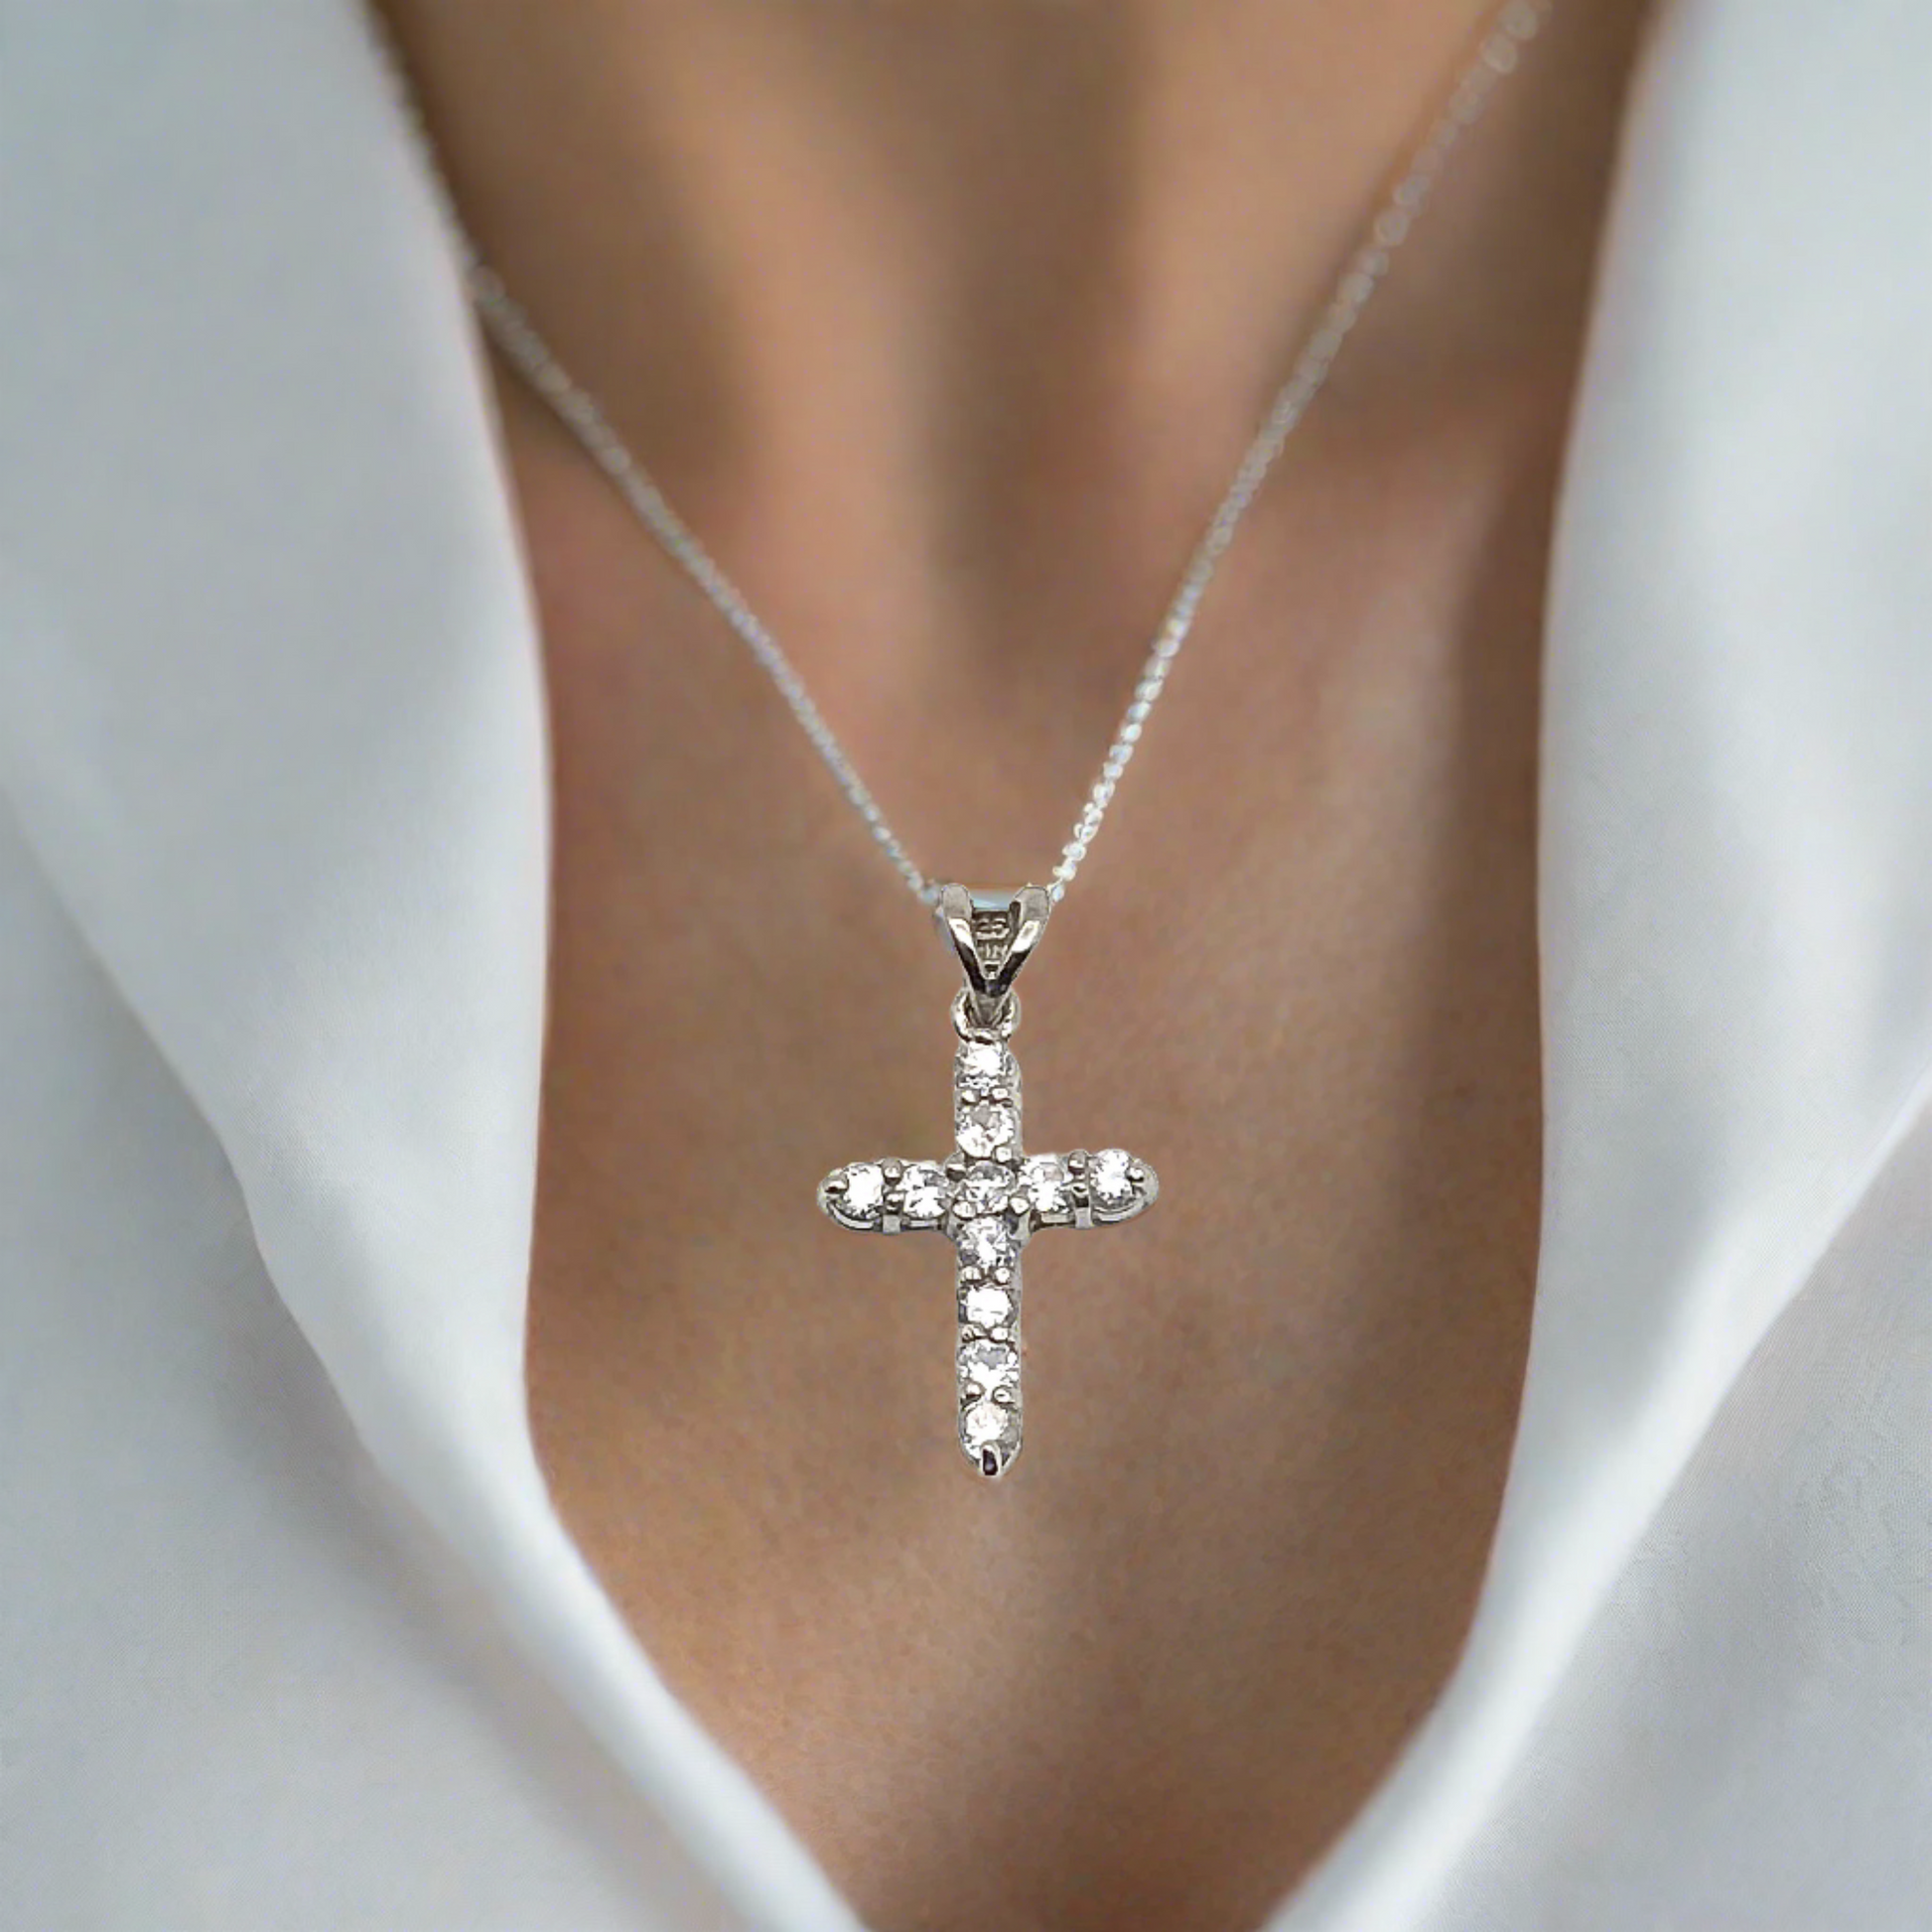 Cross Pendant Silver, Sparkling White Cubic Zirconia Stone Sterling Silver Cross Pendant - Estate Jewelry